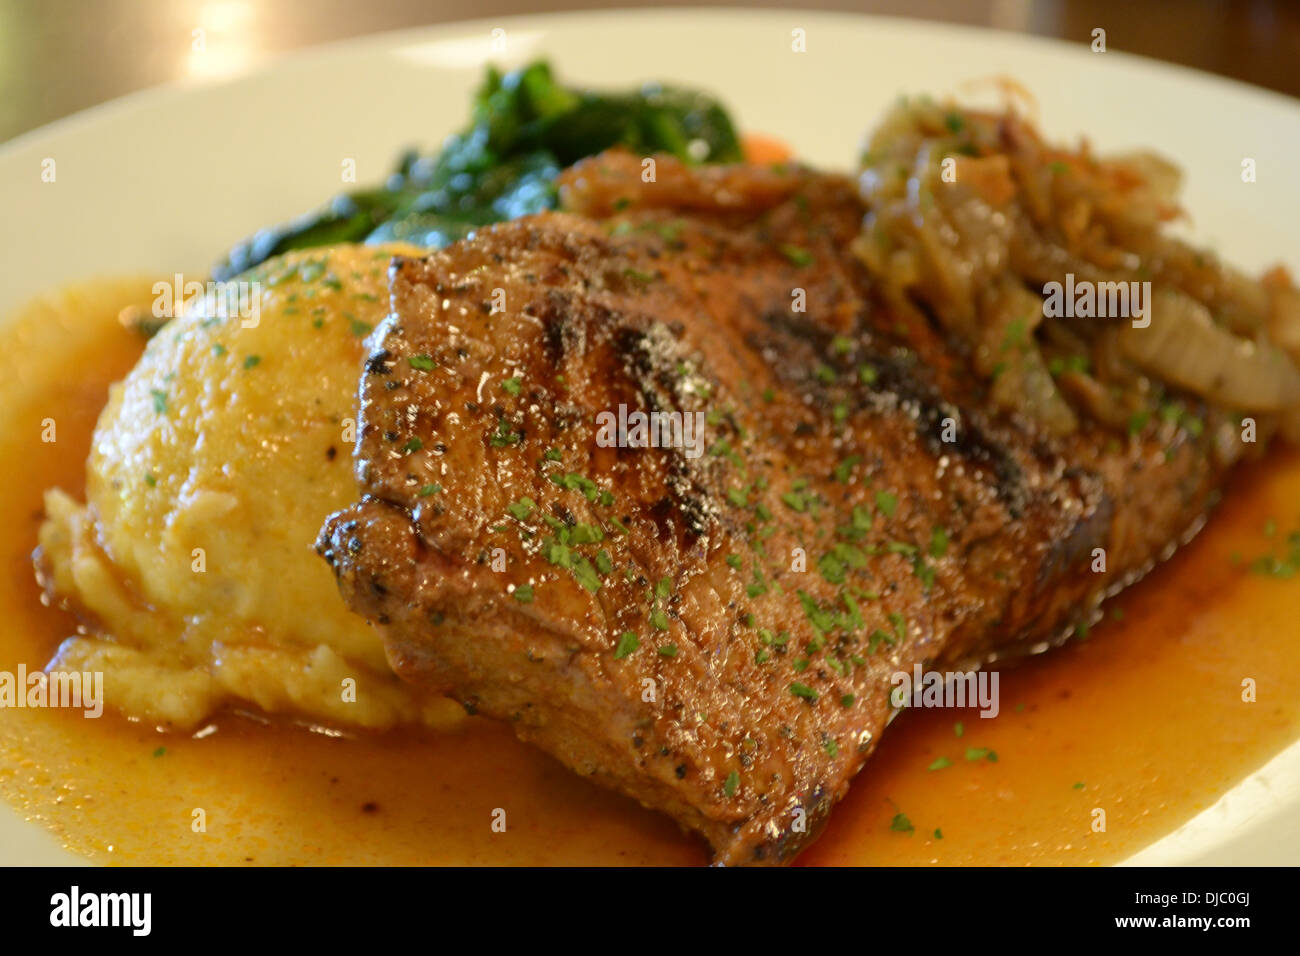 Sirloin steak with mash potato Stock Photo